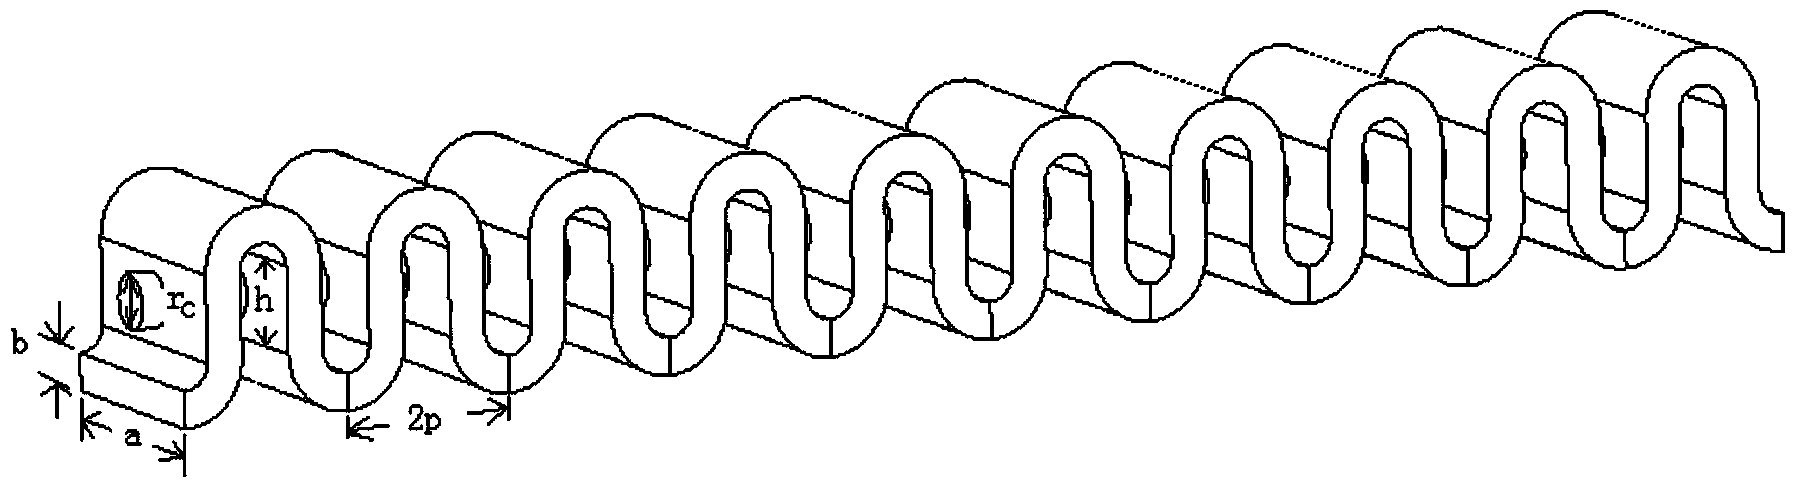 Arc-shaped curve boundary folding waveguide slow wave structure